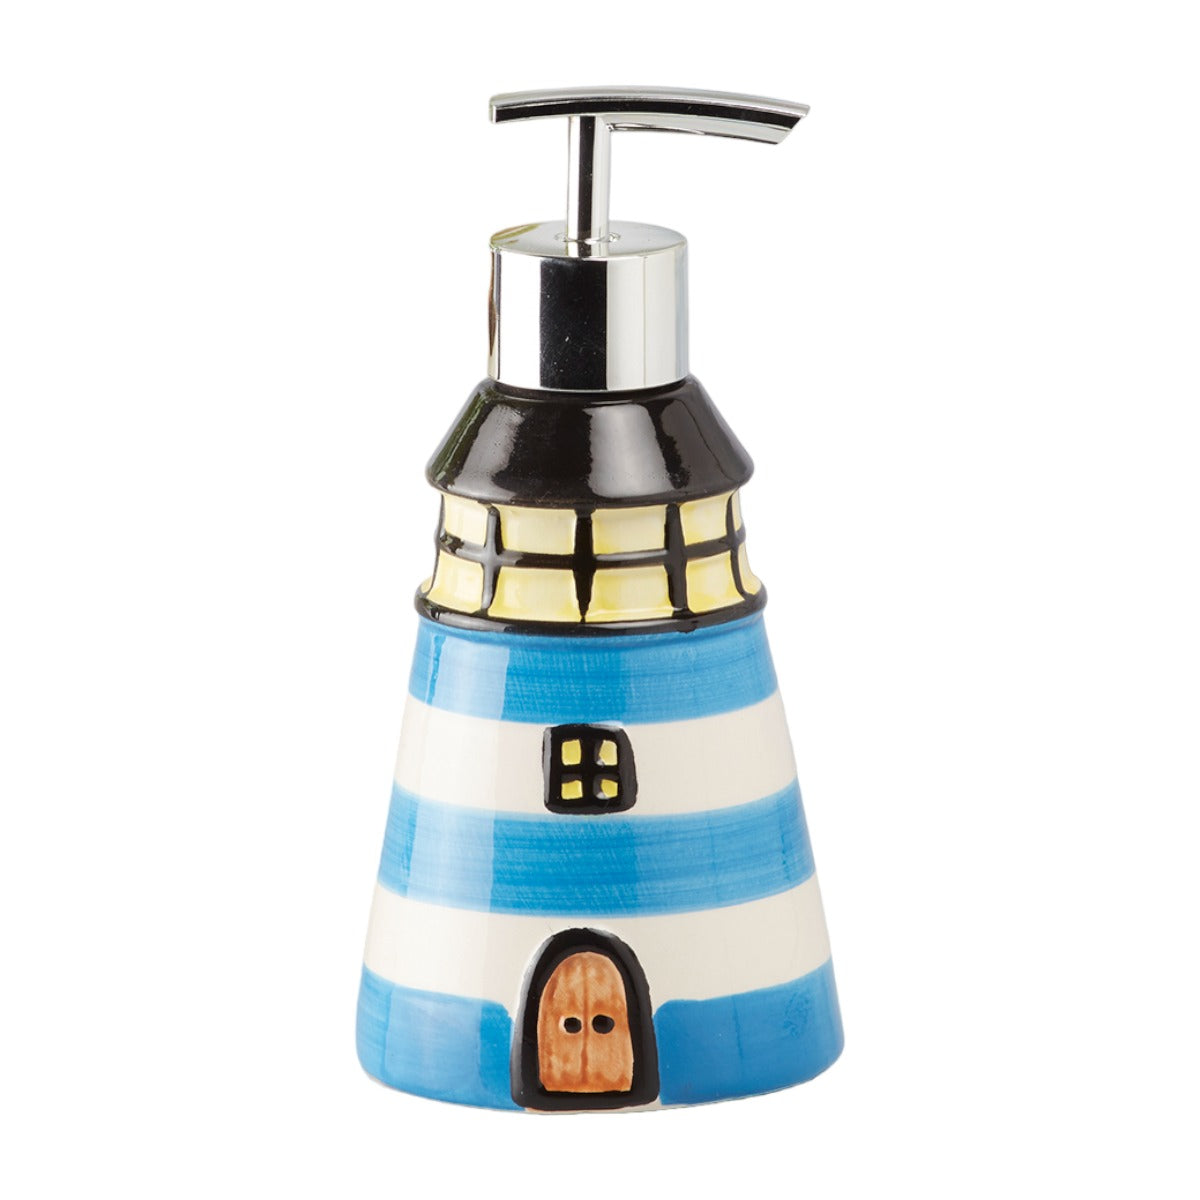 Ceramic Soap Dispenser handwash Pump for Bathroom, Set of 1, Blue (10142)